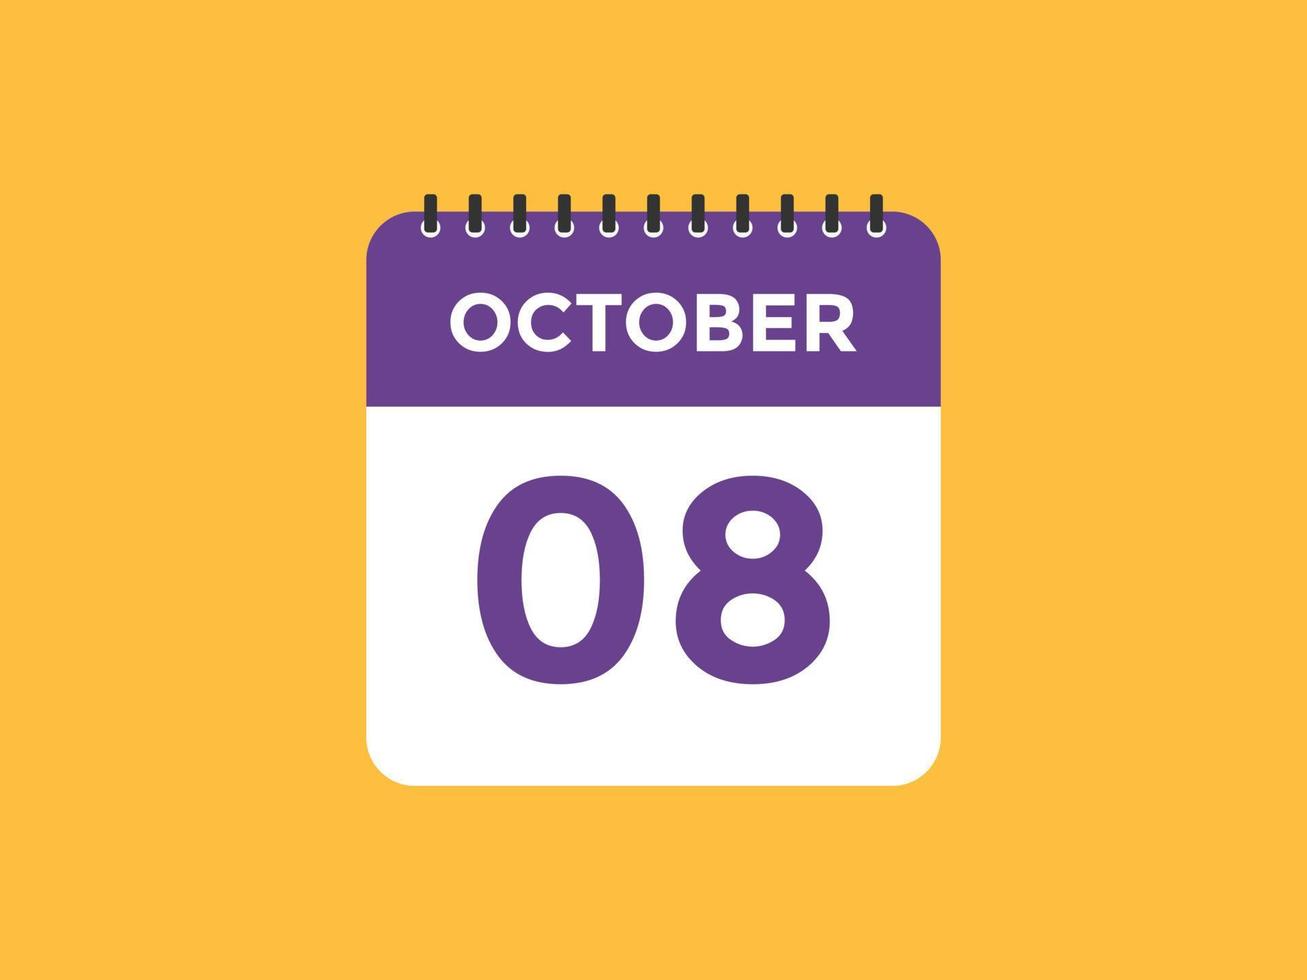 oktober 8 kalender påminnelse. 8:e oktober dagligen kalender ikon mall. kalender 8:e oktober ikon design mall. vektor illustration